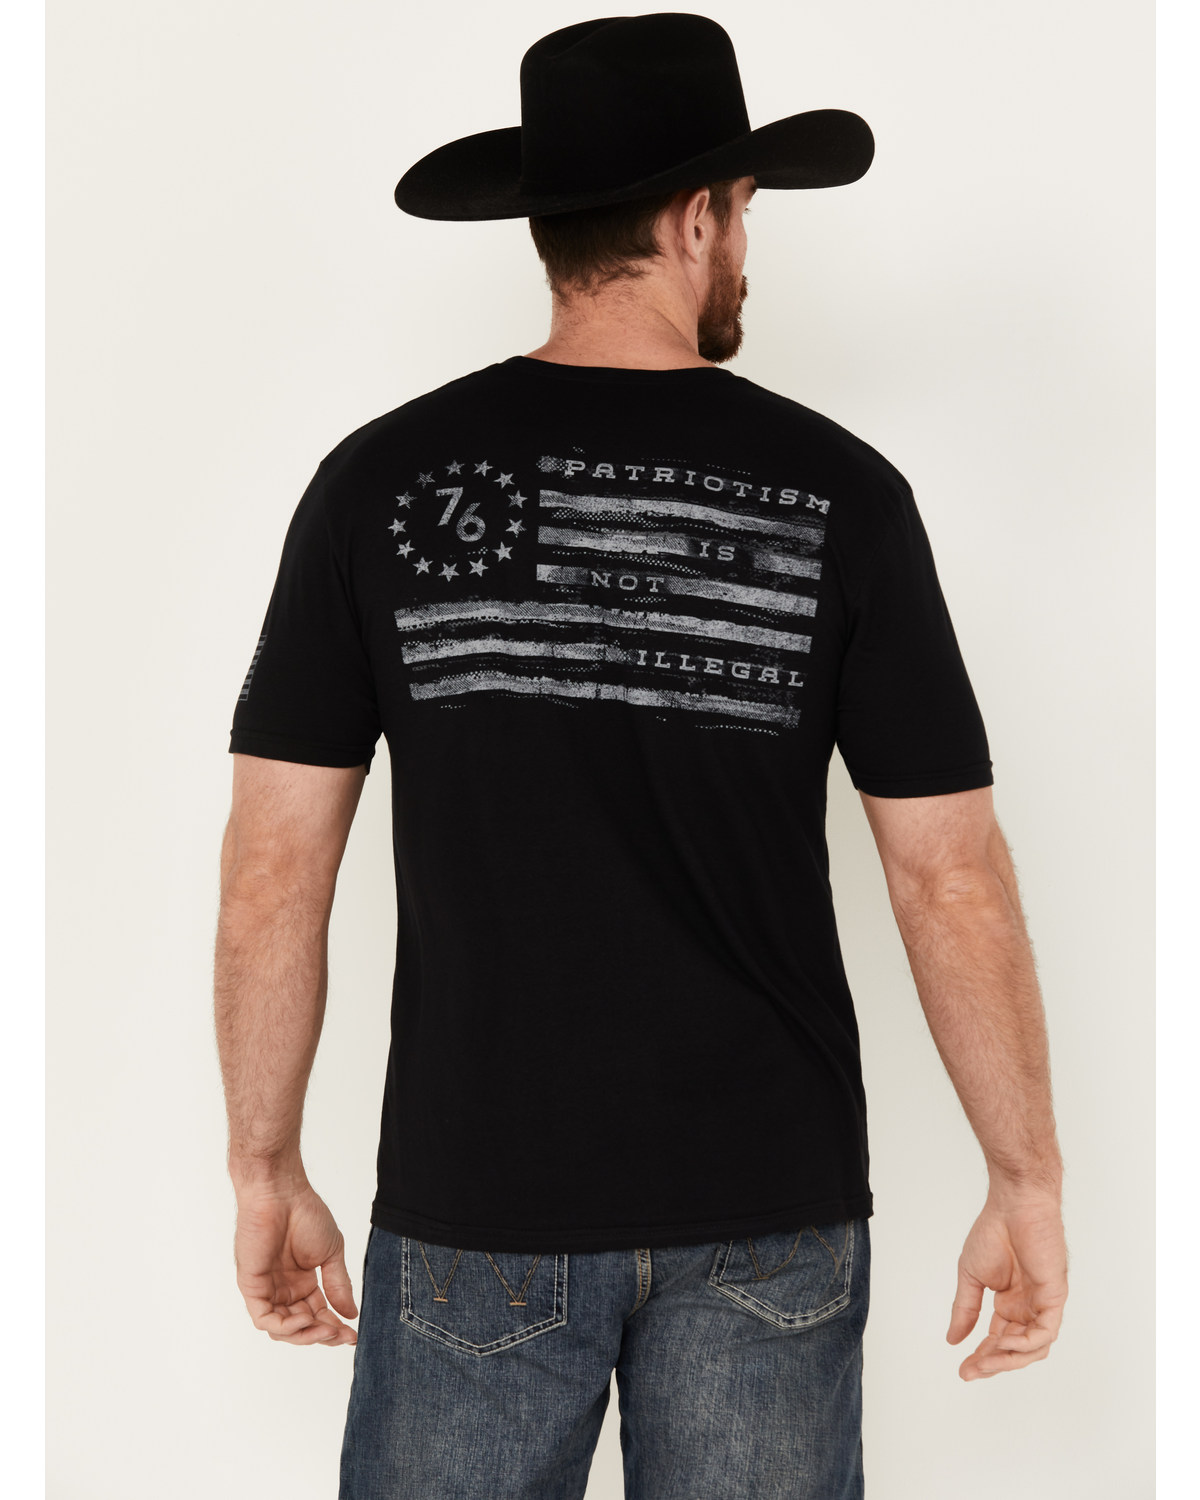 Buckwear Men's Boot Barn Exclusive Not Illegal Short Sleeve Graphic T-Shirt